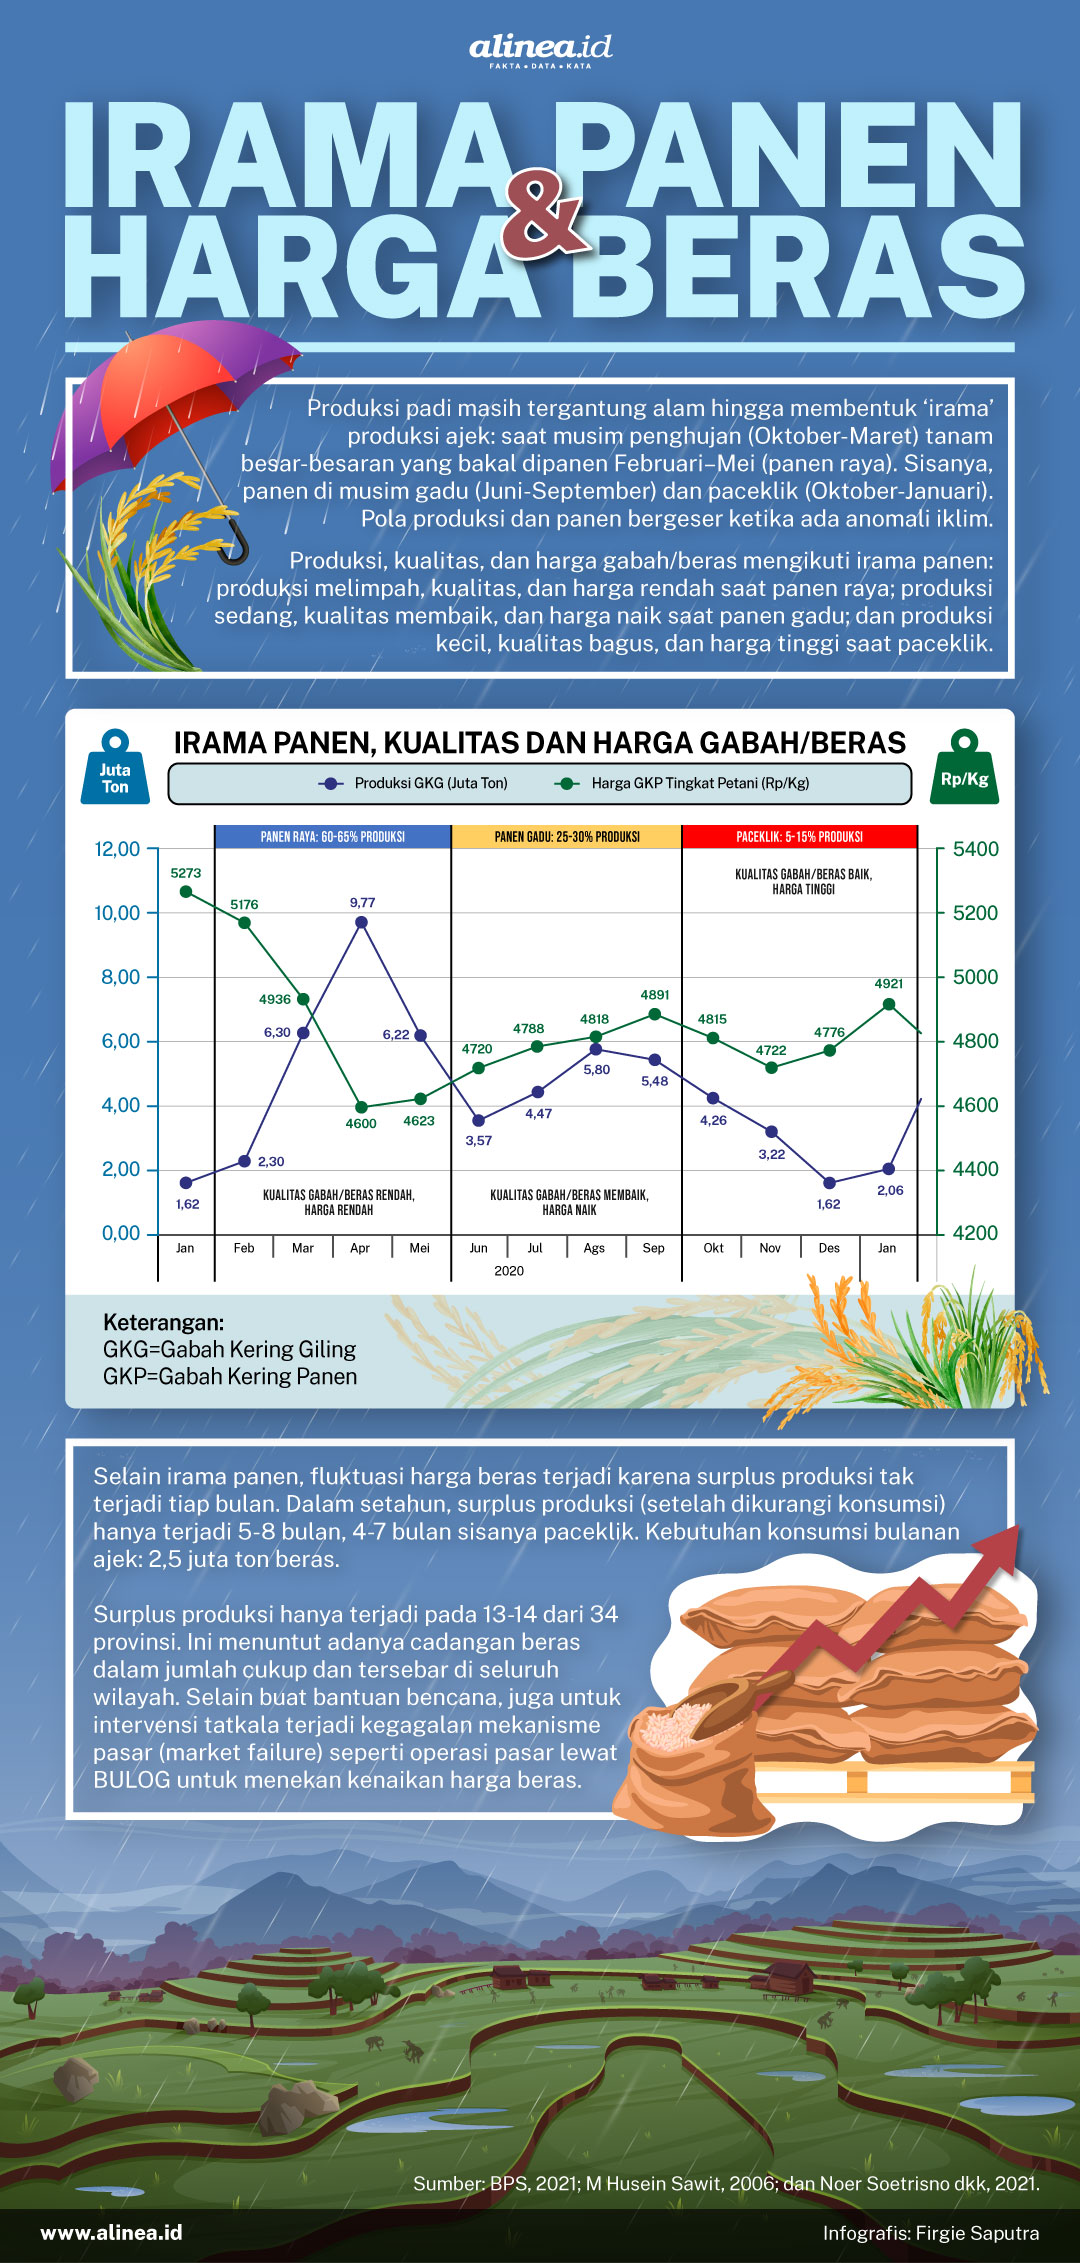 Infografik irama panen dan harga beras. Alinea.id/Firgie Saputra.